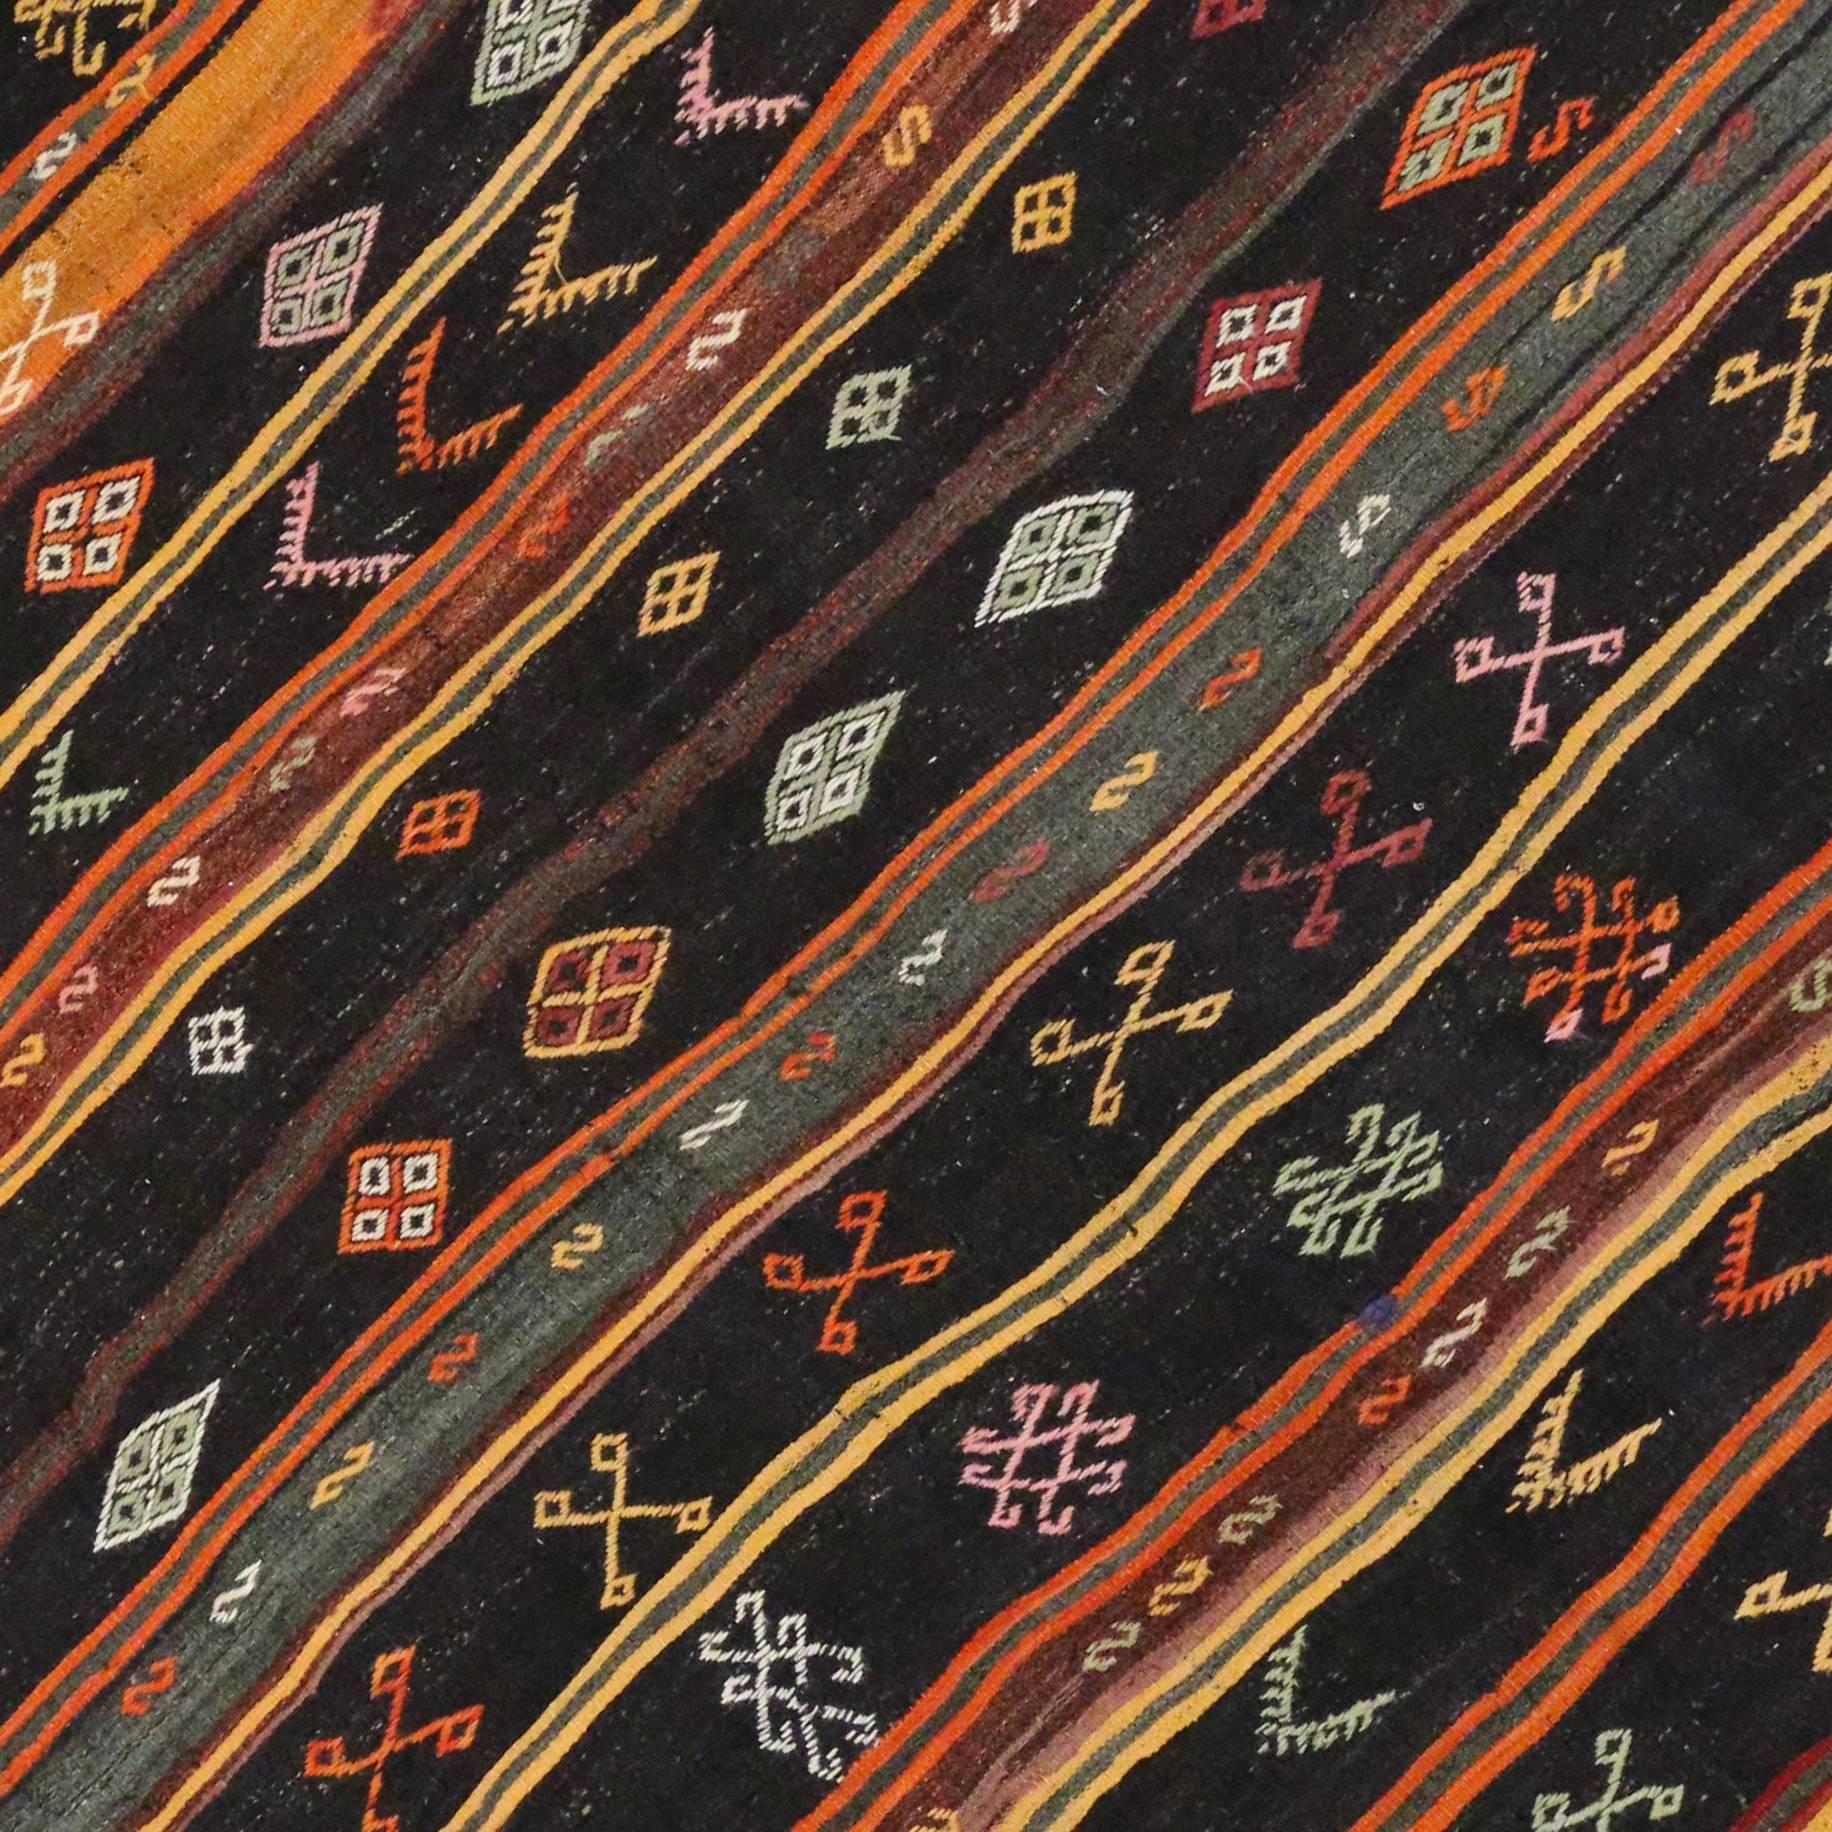 Hand-Woven Vintage Turkish Kilim Rug with Modern Tribal Design, Flatweave Kilim Rug.